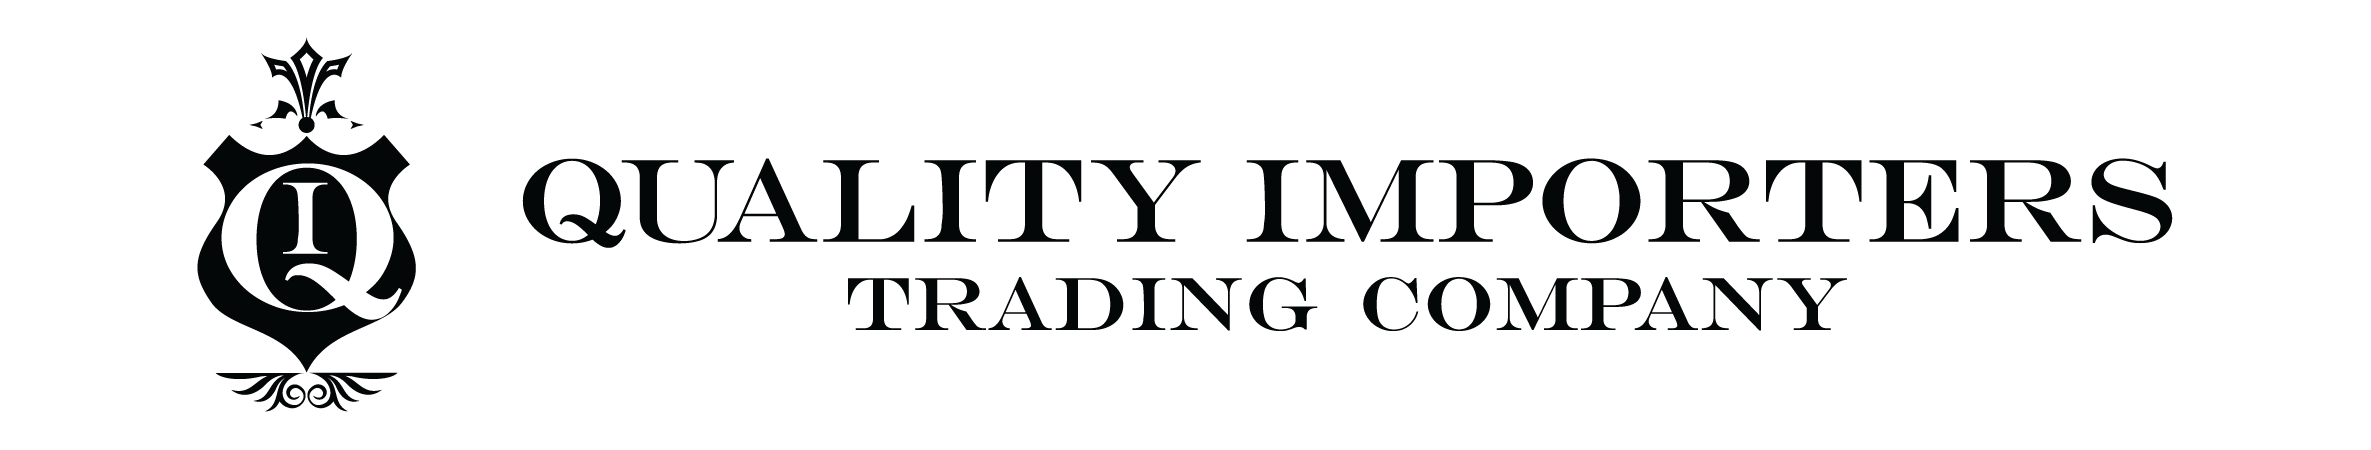 Quality Imports Trading Company Logo